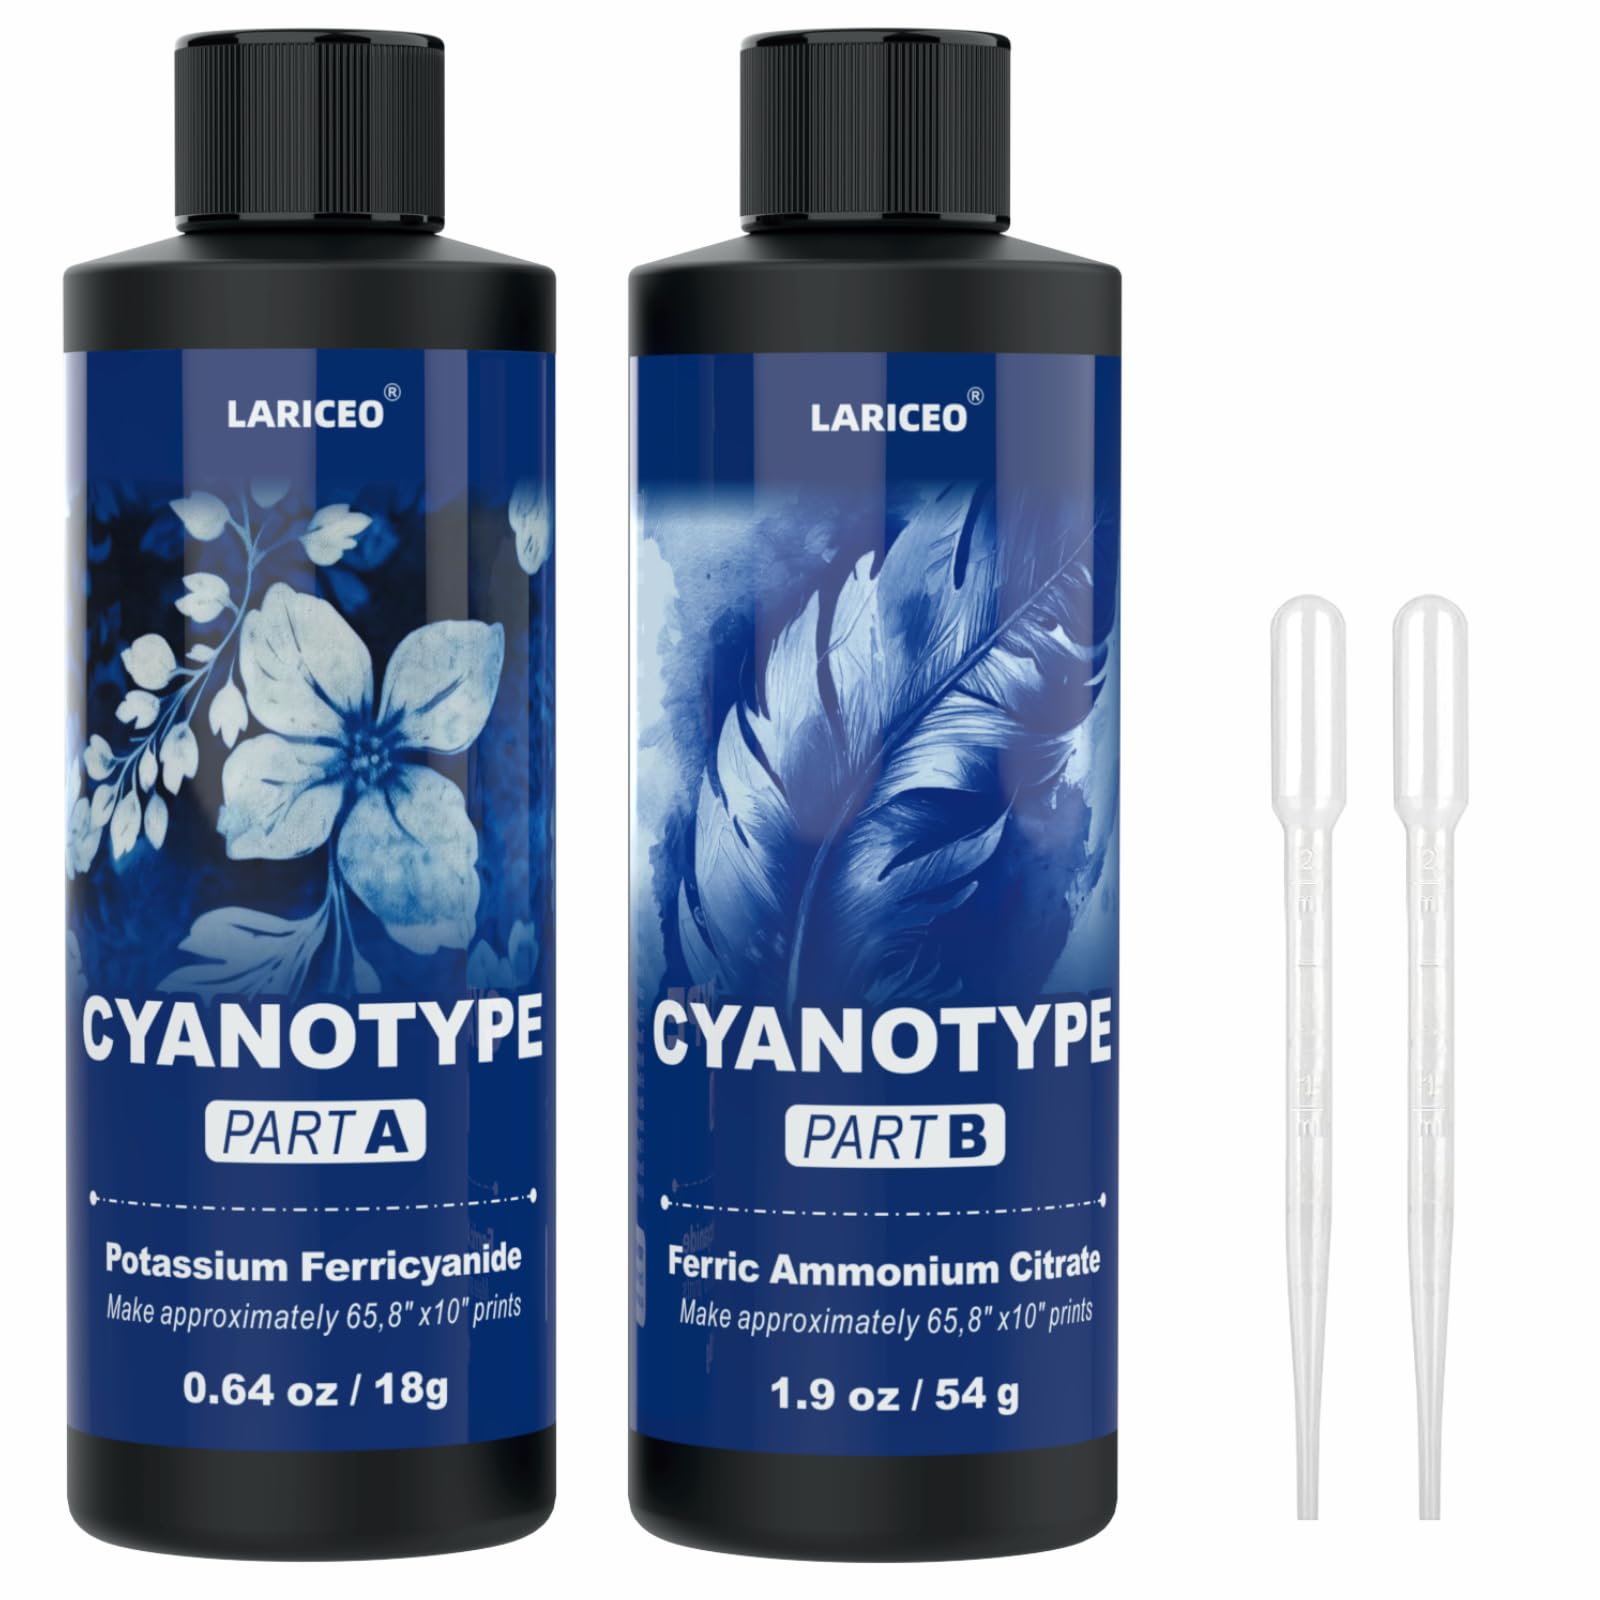 Cyanotype Sensitizer Kit, 16oz Cyanotype Kit - 2 Part Sensitizer, Cyanotype Dye - Cyanotype Kit Solar Print Set, Cyanotype Sun Printing Kit for Photographic Printing on Paper and Fabric